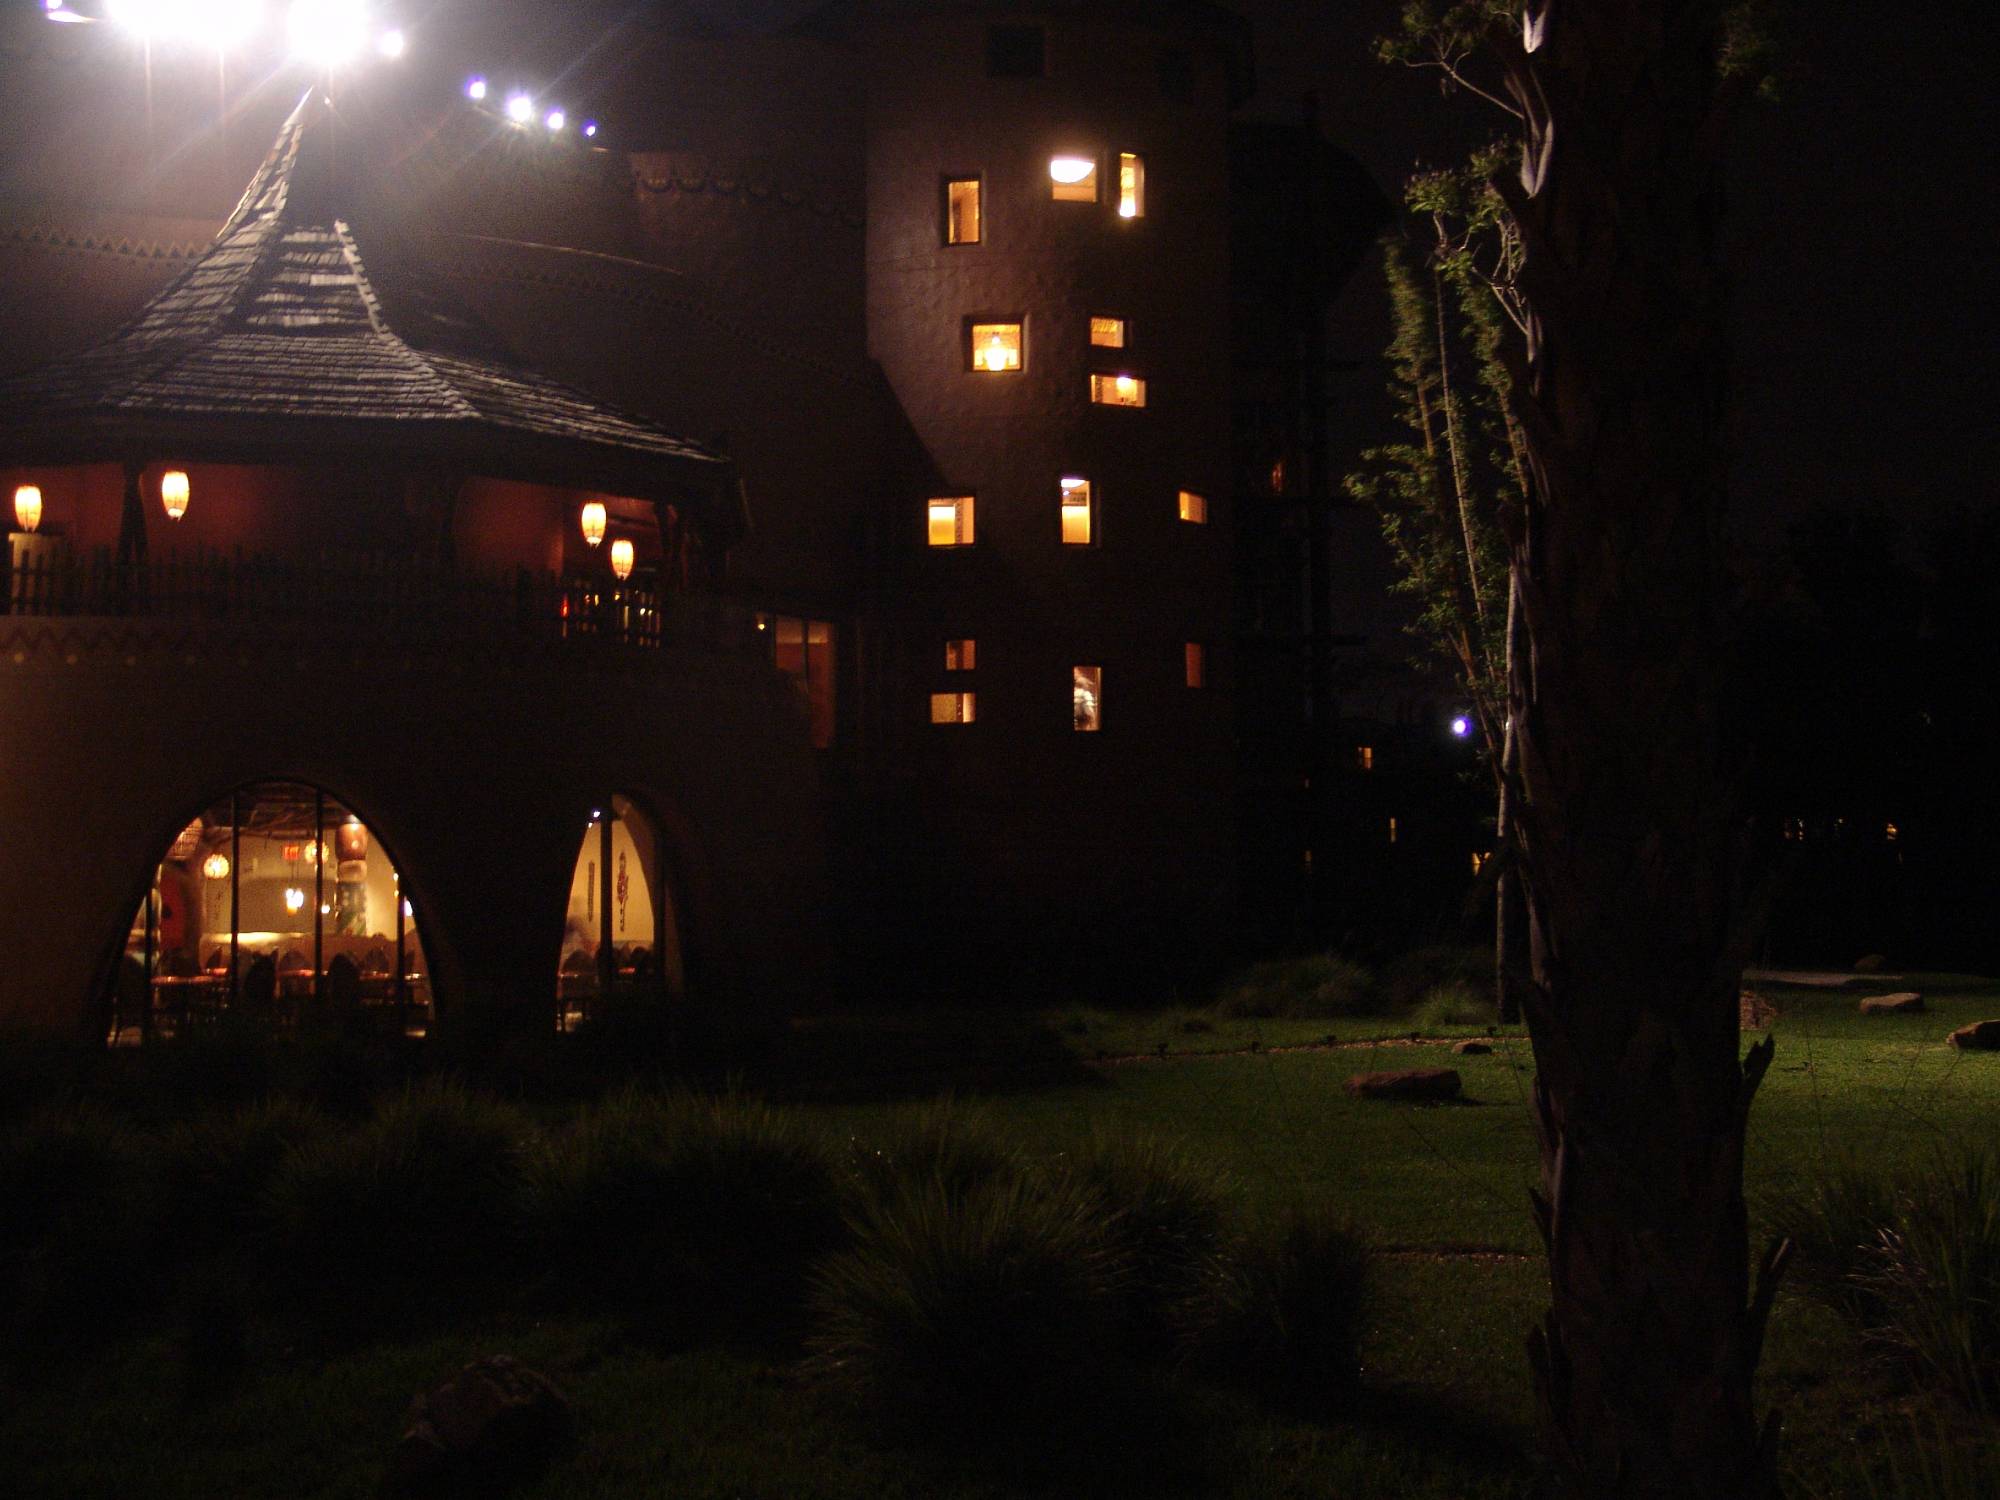 Animal Kingdom Lodge - Kidani Village at night